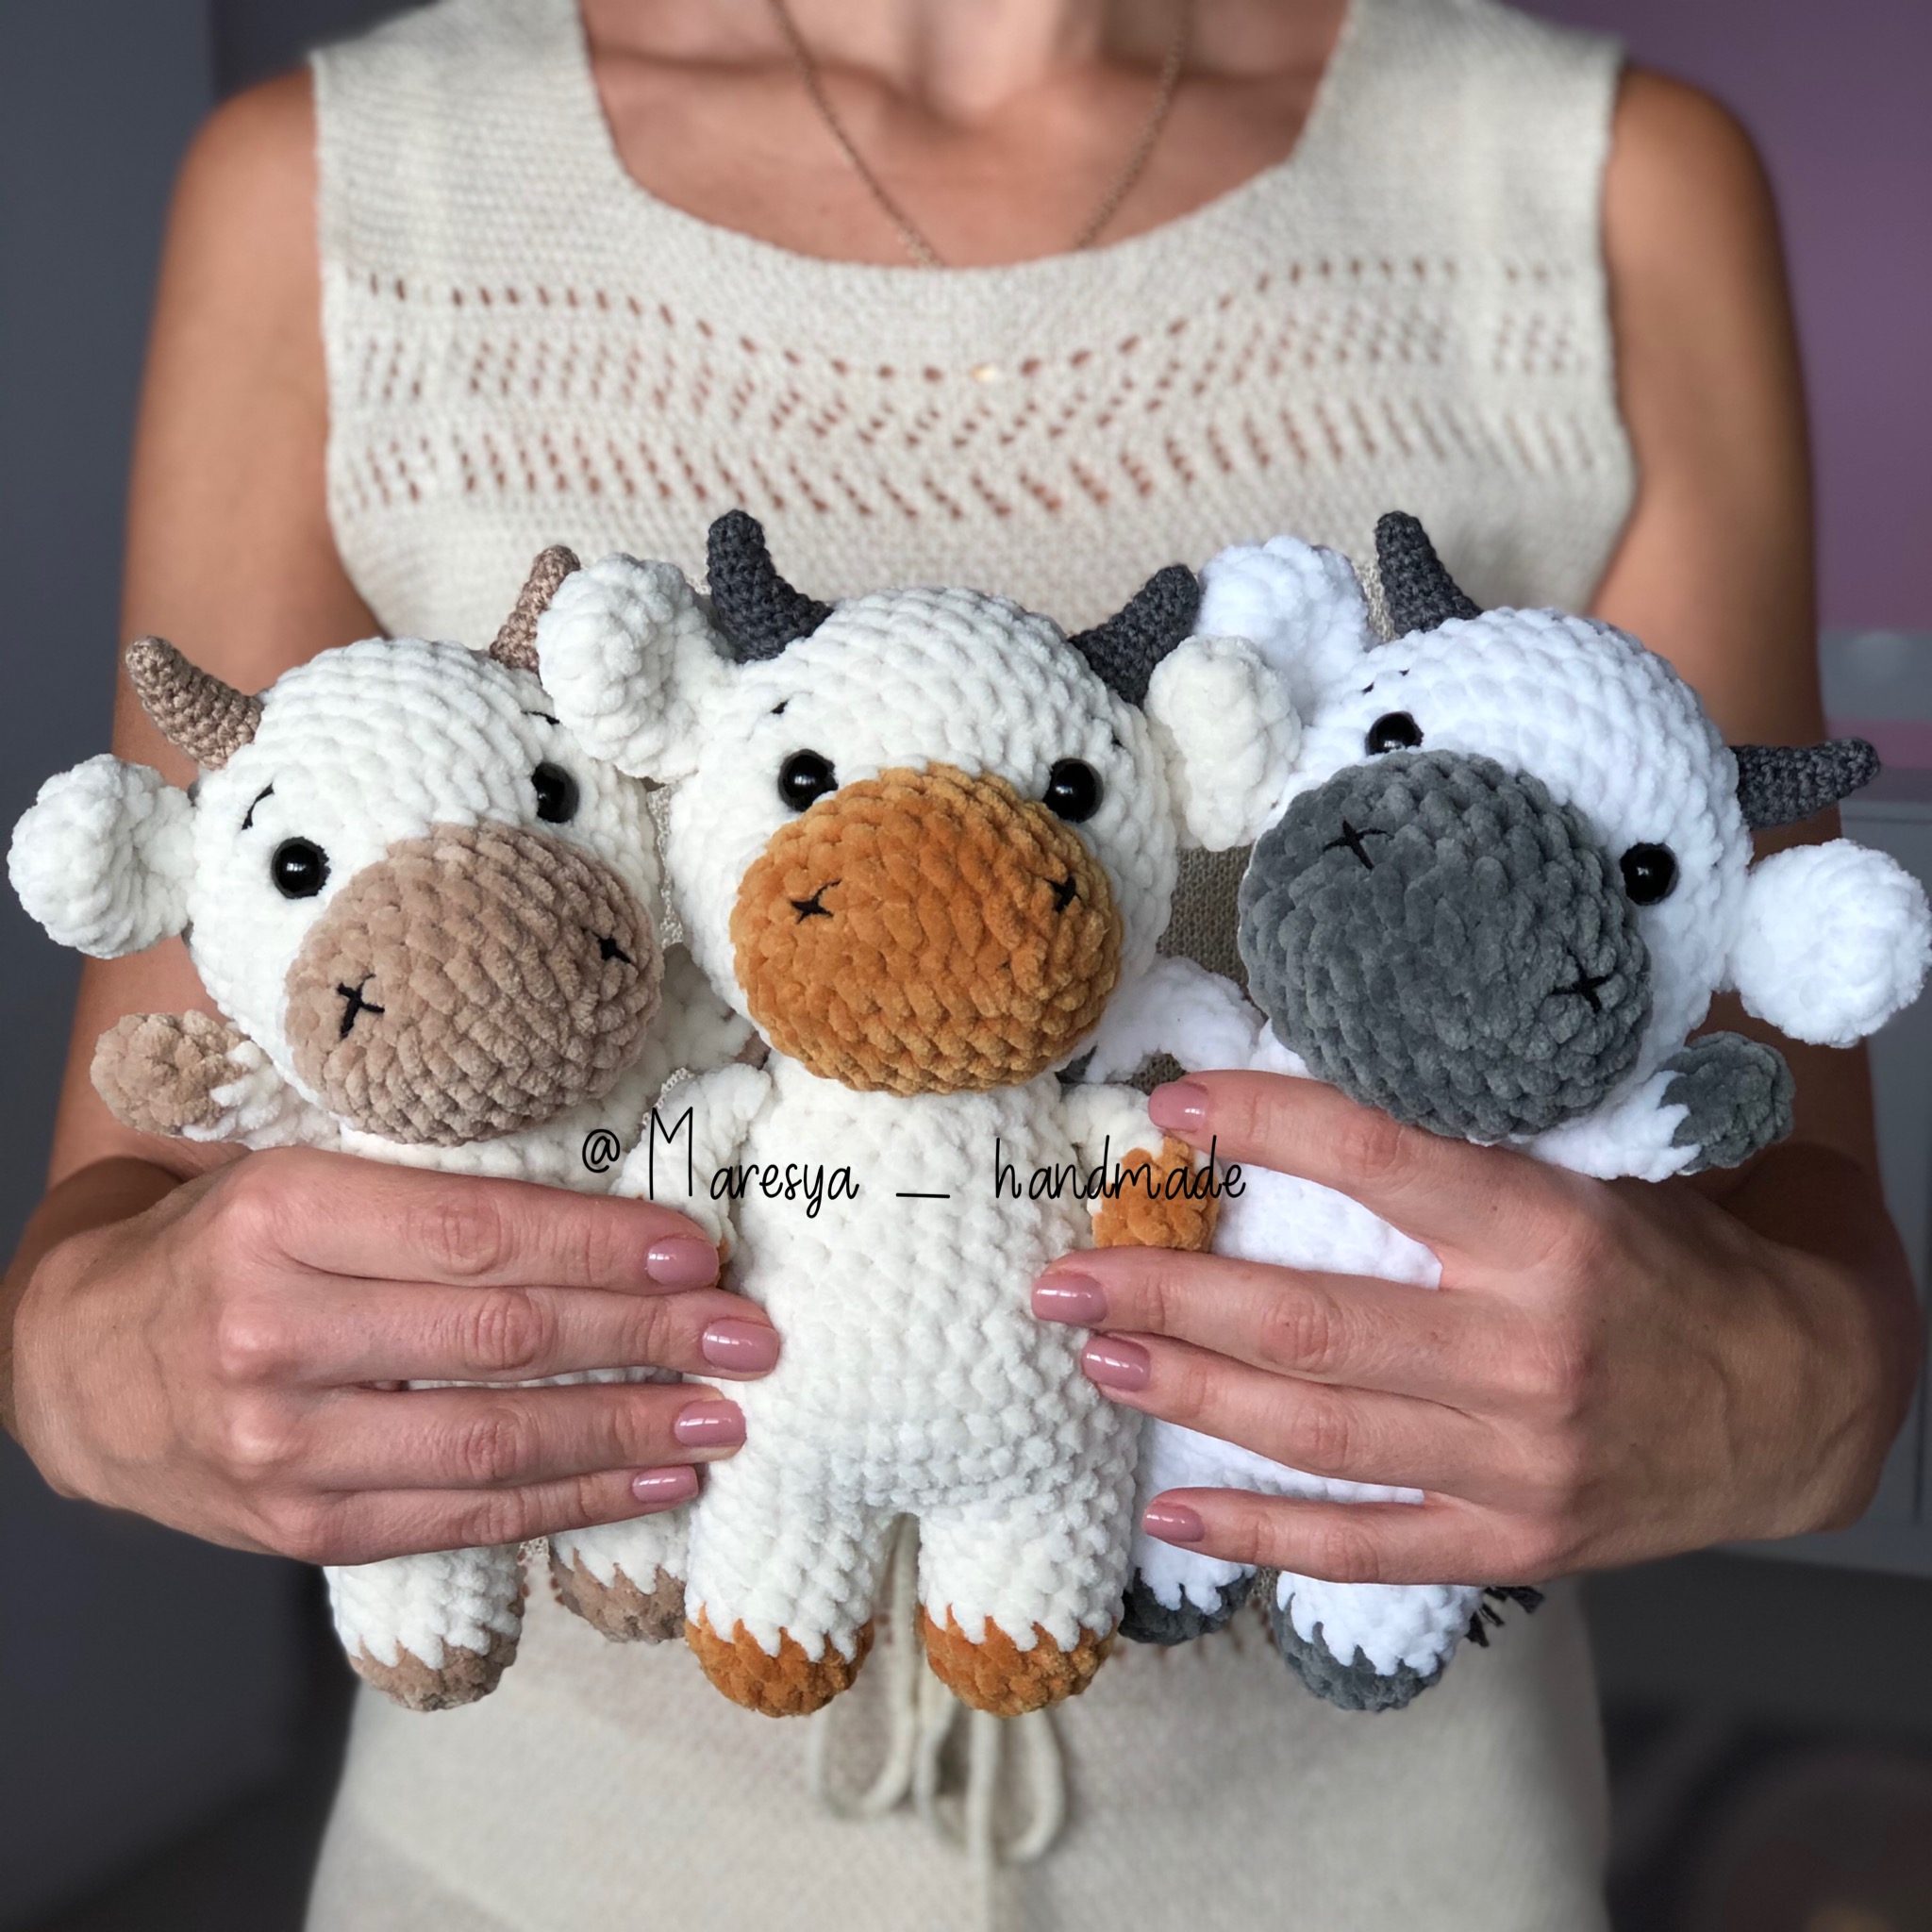 Funny Bull Keychain Crochet Pattern – KnittingKitty – I Crochet patterns  for amigurumi toys I Knitting Kitty